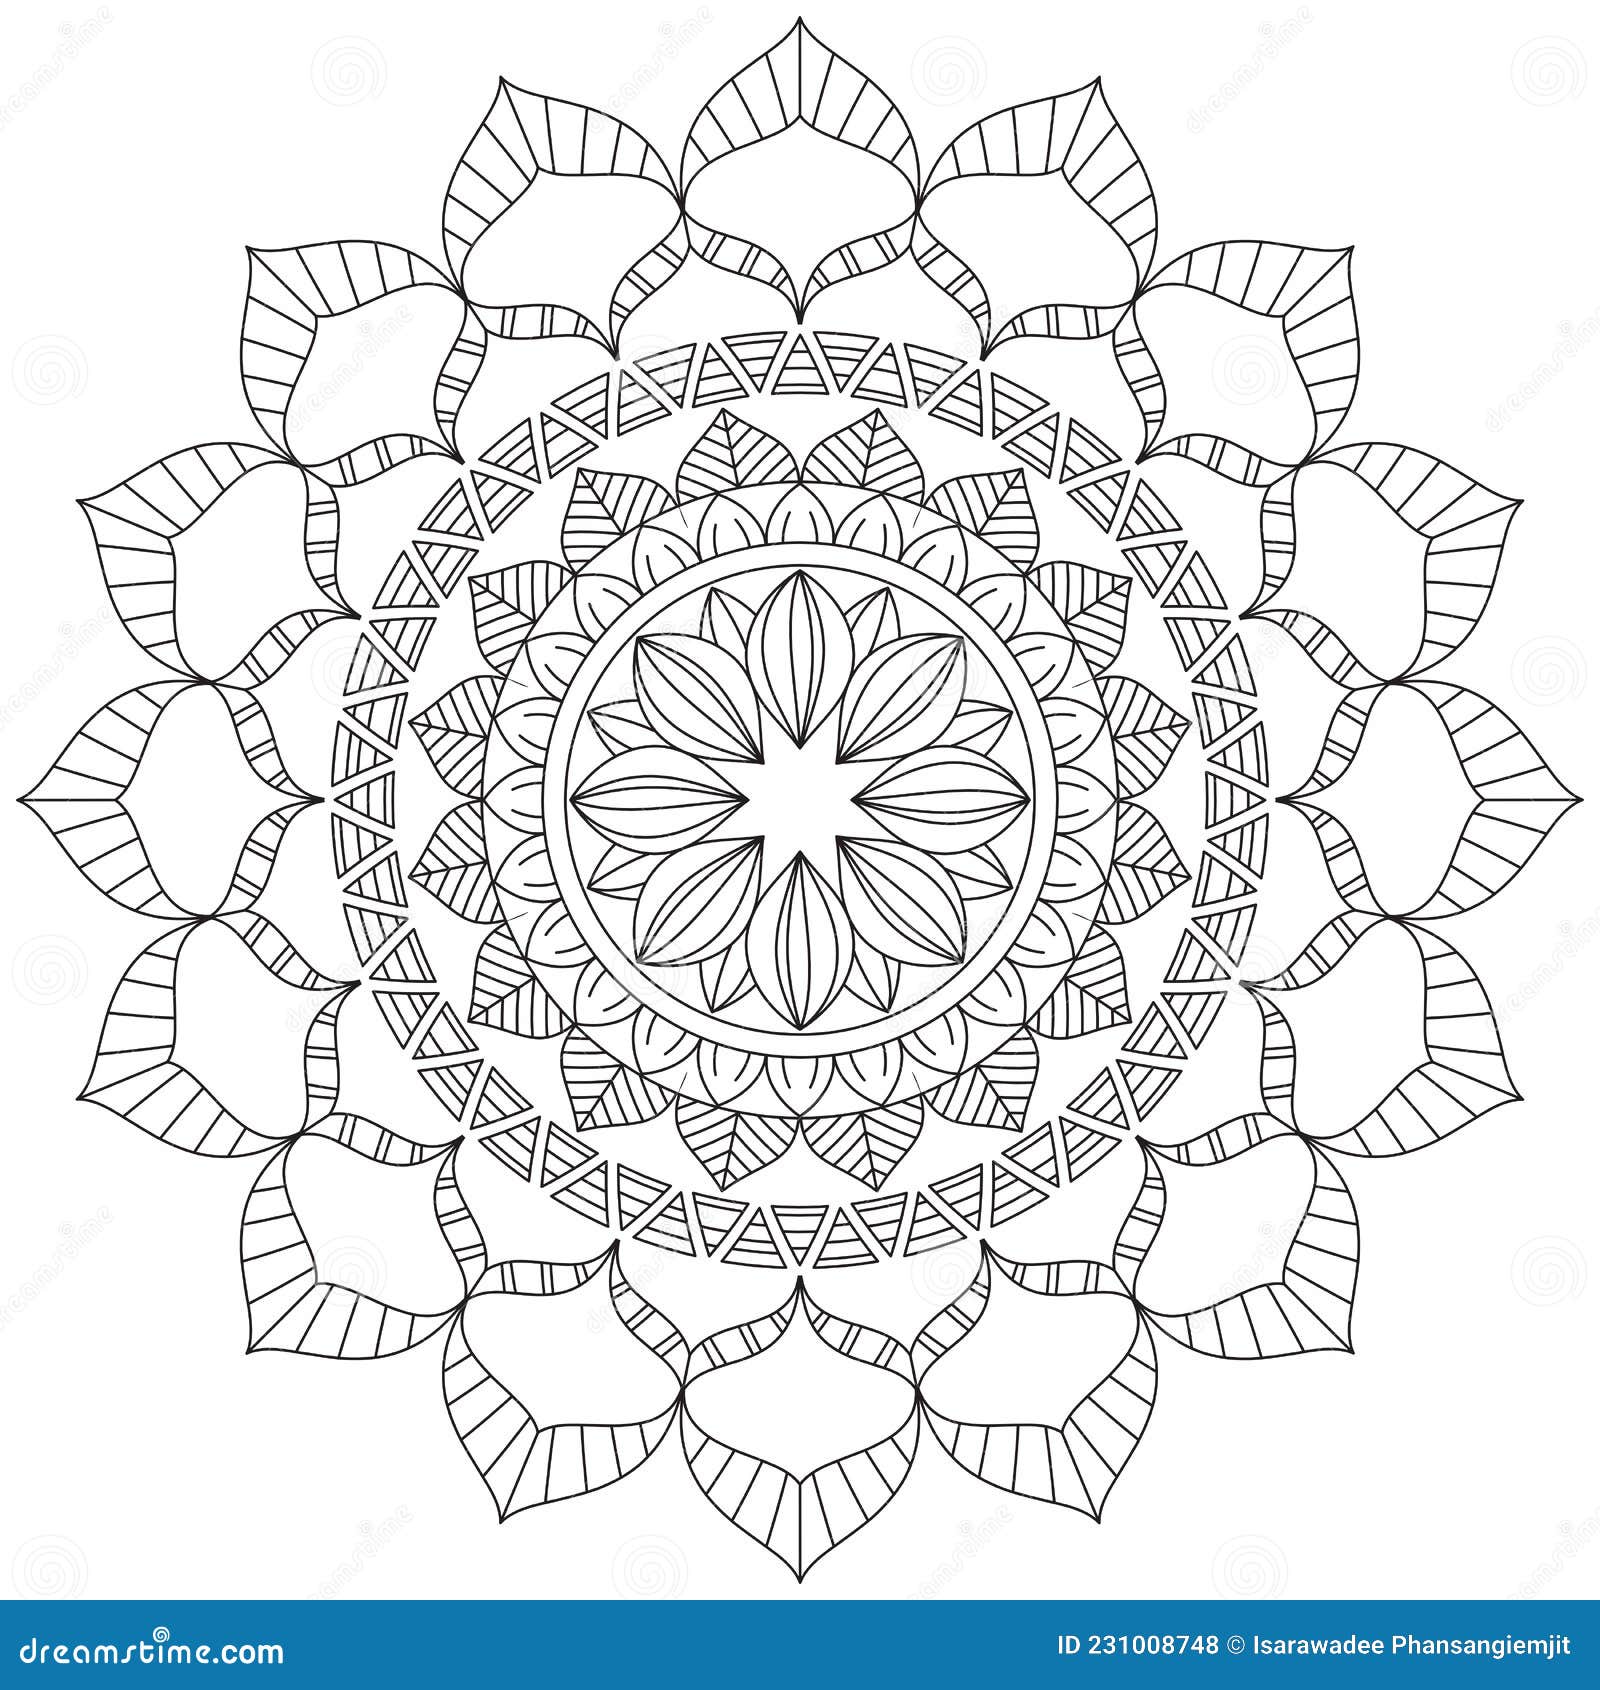 https://thumbs.dreamstime.com/z/leaf-flower-petal-coloring-mandala-art-simple-graphic-shape-vector-floral-oriental-outline-vintage-decorative-elements-pattern-231008748.jpg